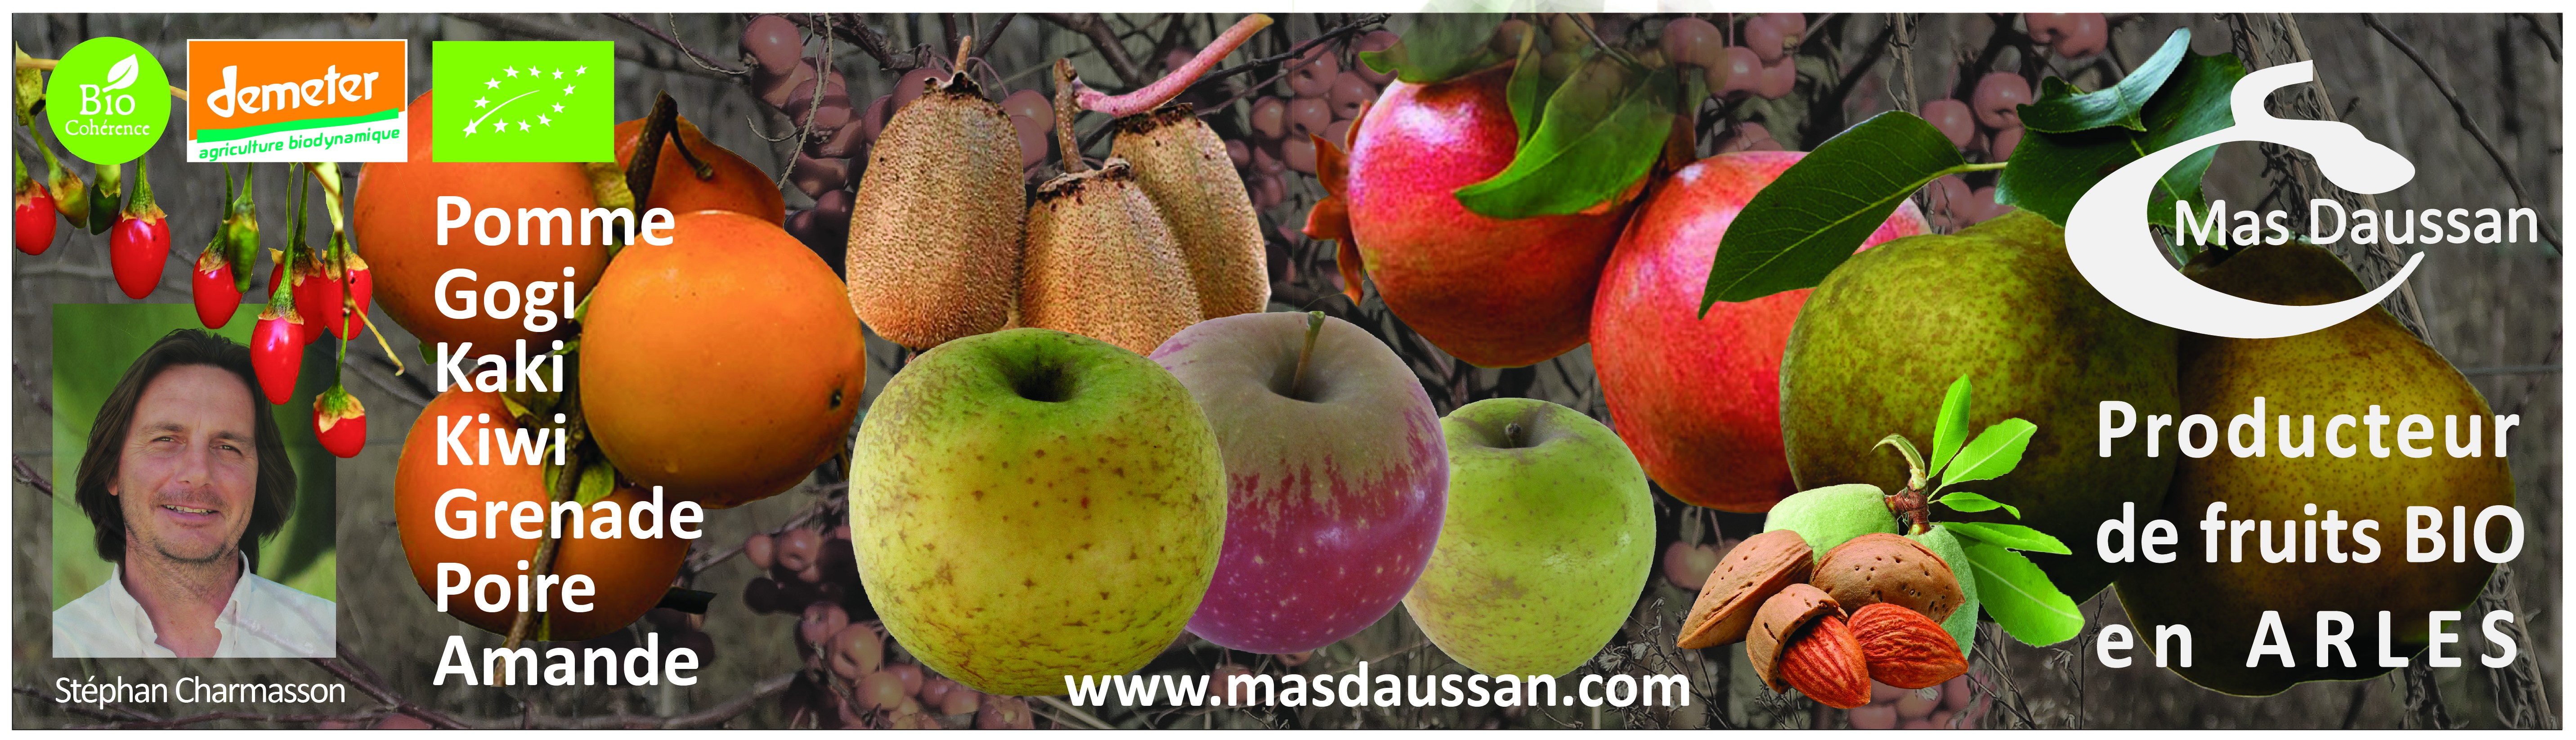 Mas Daussan producteur de fruits Bio